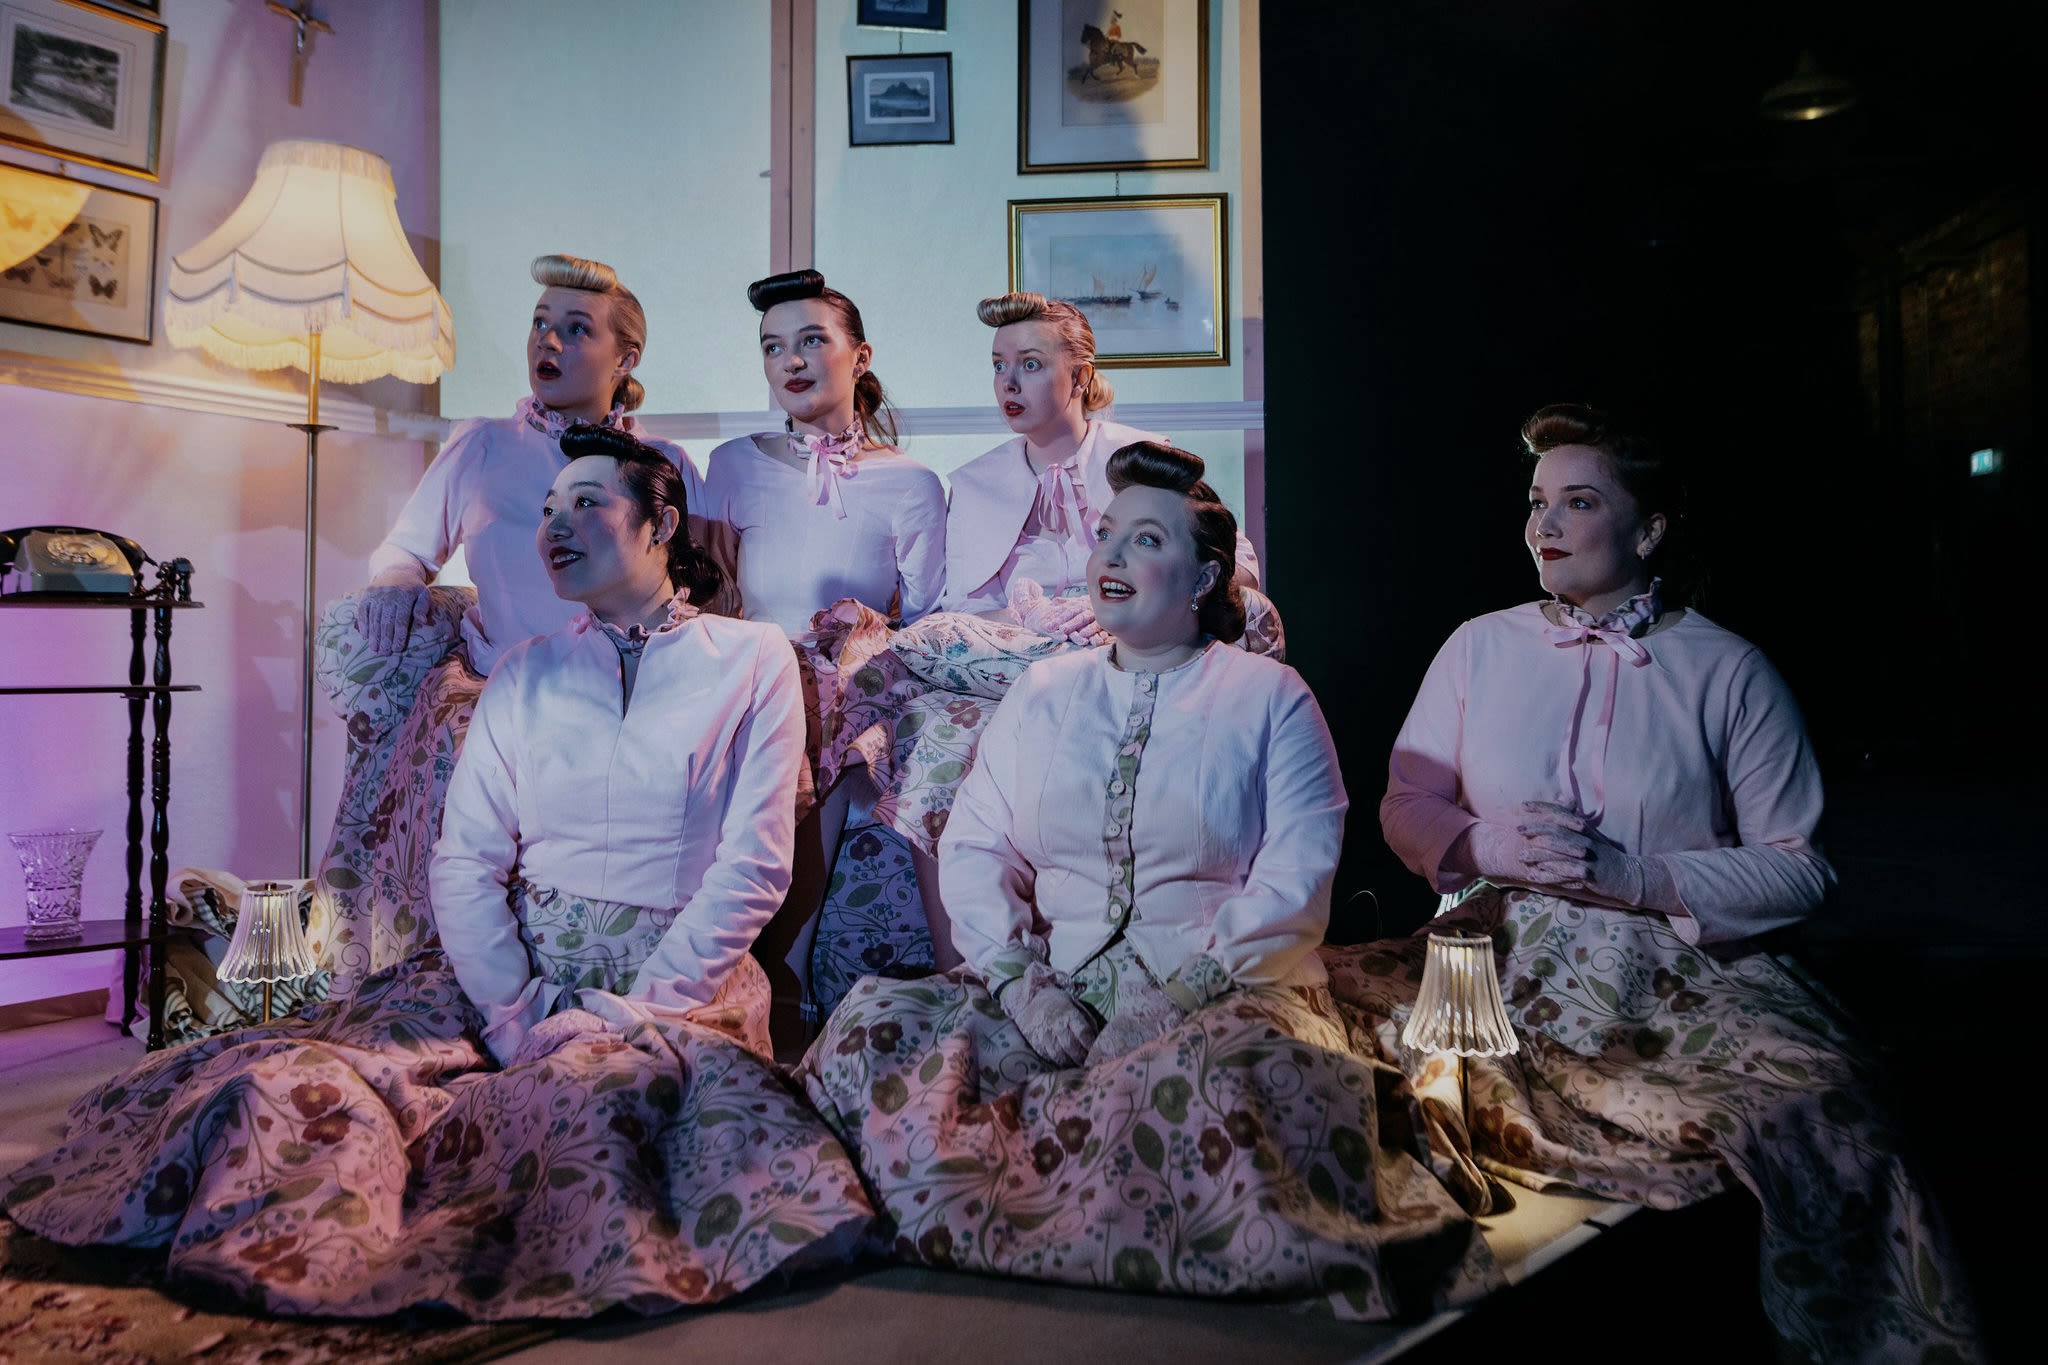 Group of women dressed in pink singing. 